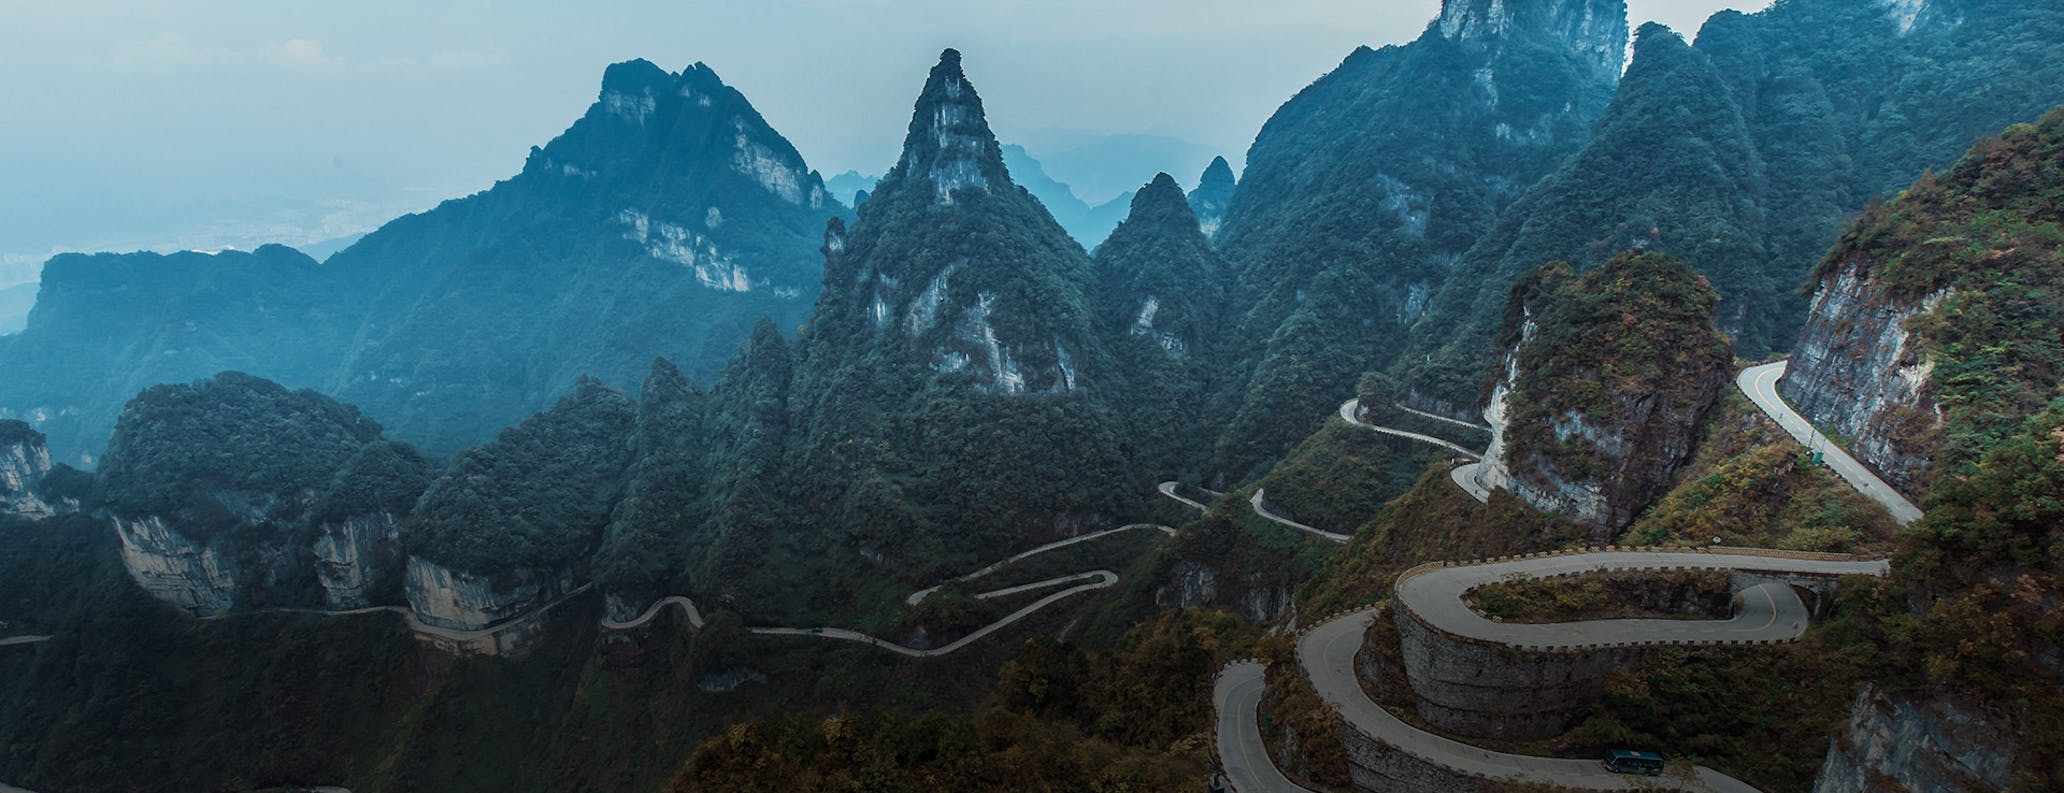 Hairpin bends on Tianmen Mountain